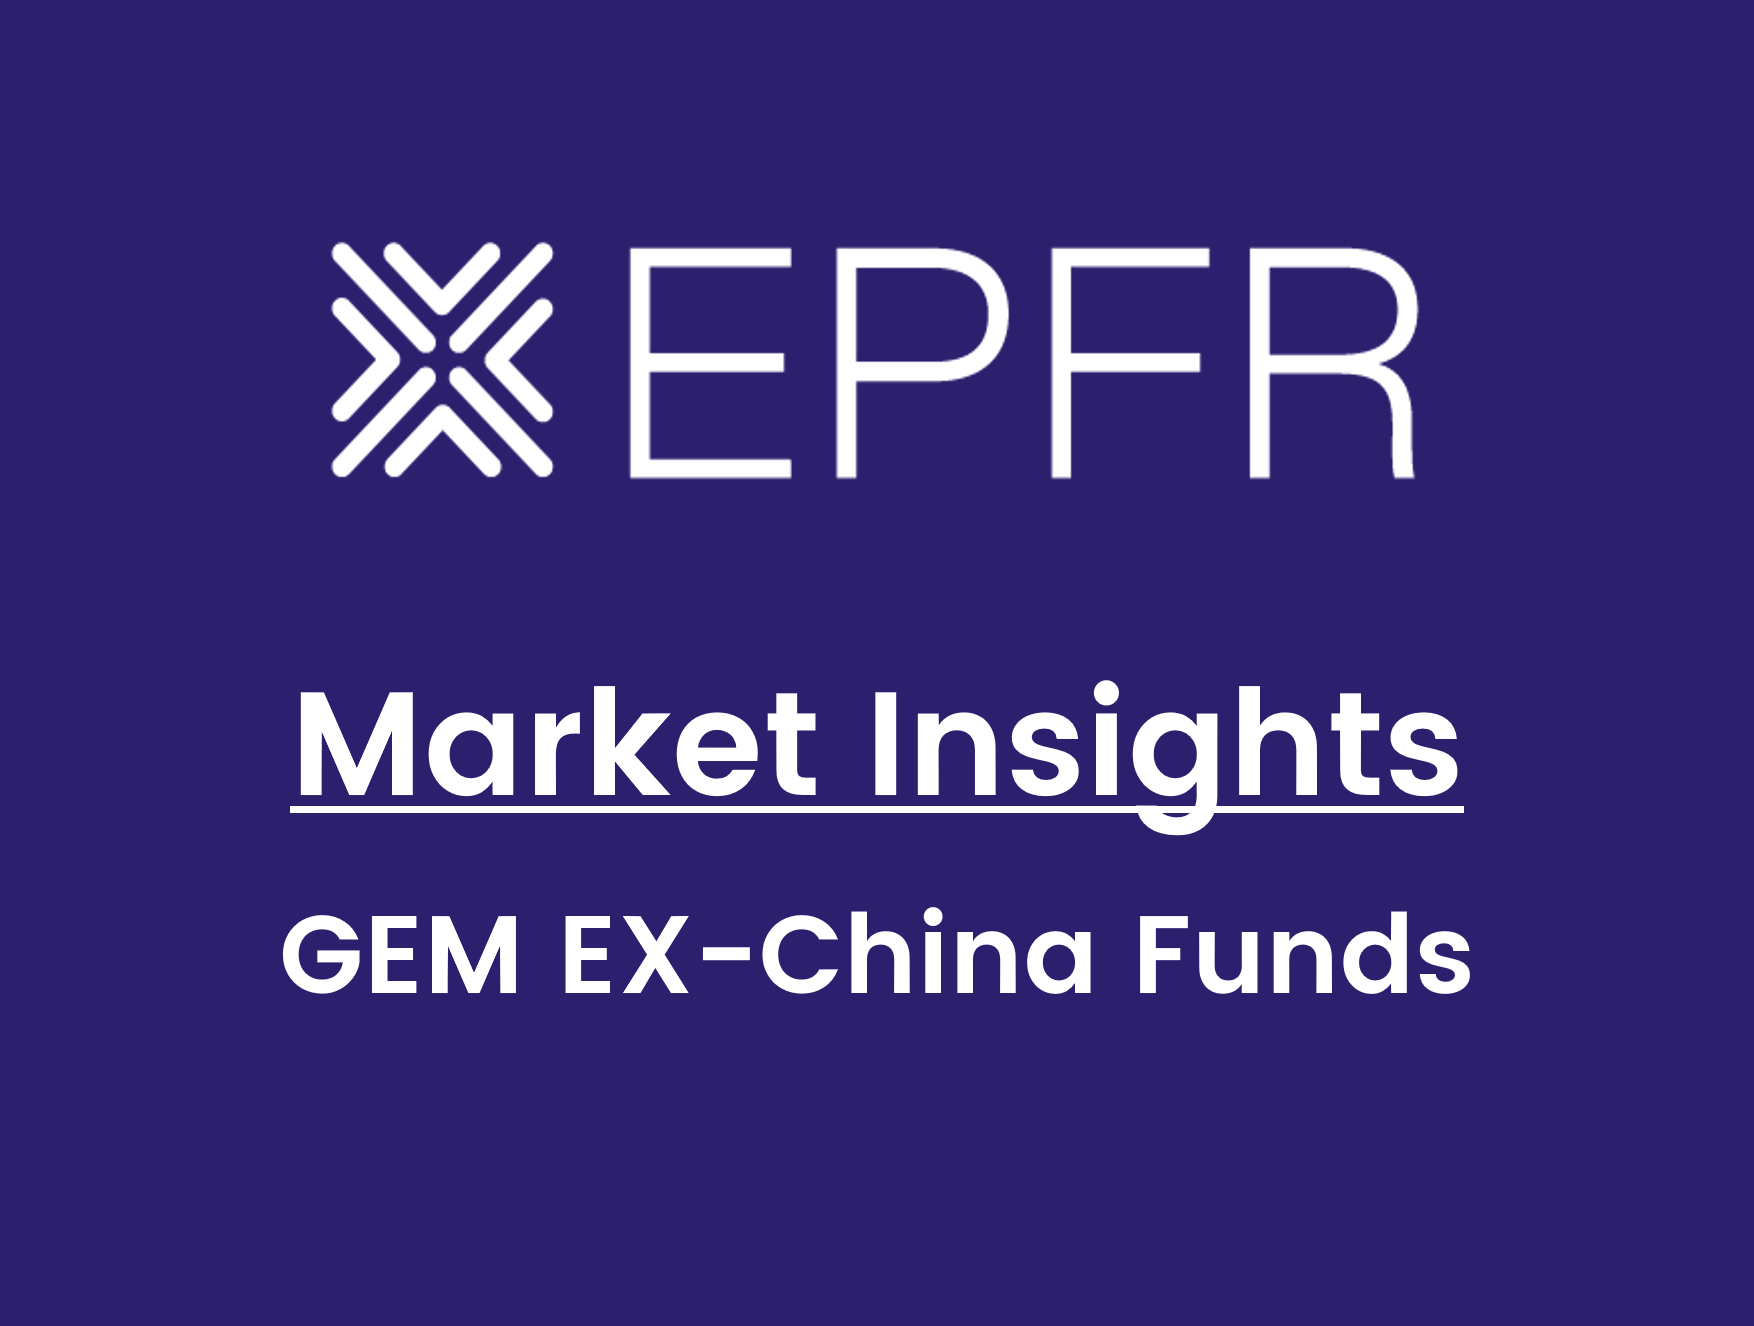 "Market Insights: GEM Ex-China Funds"